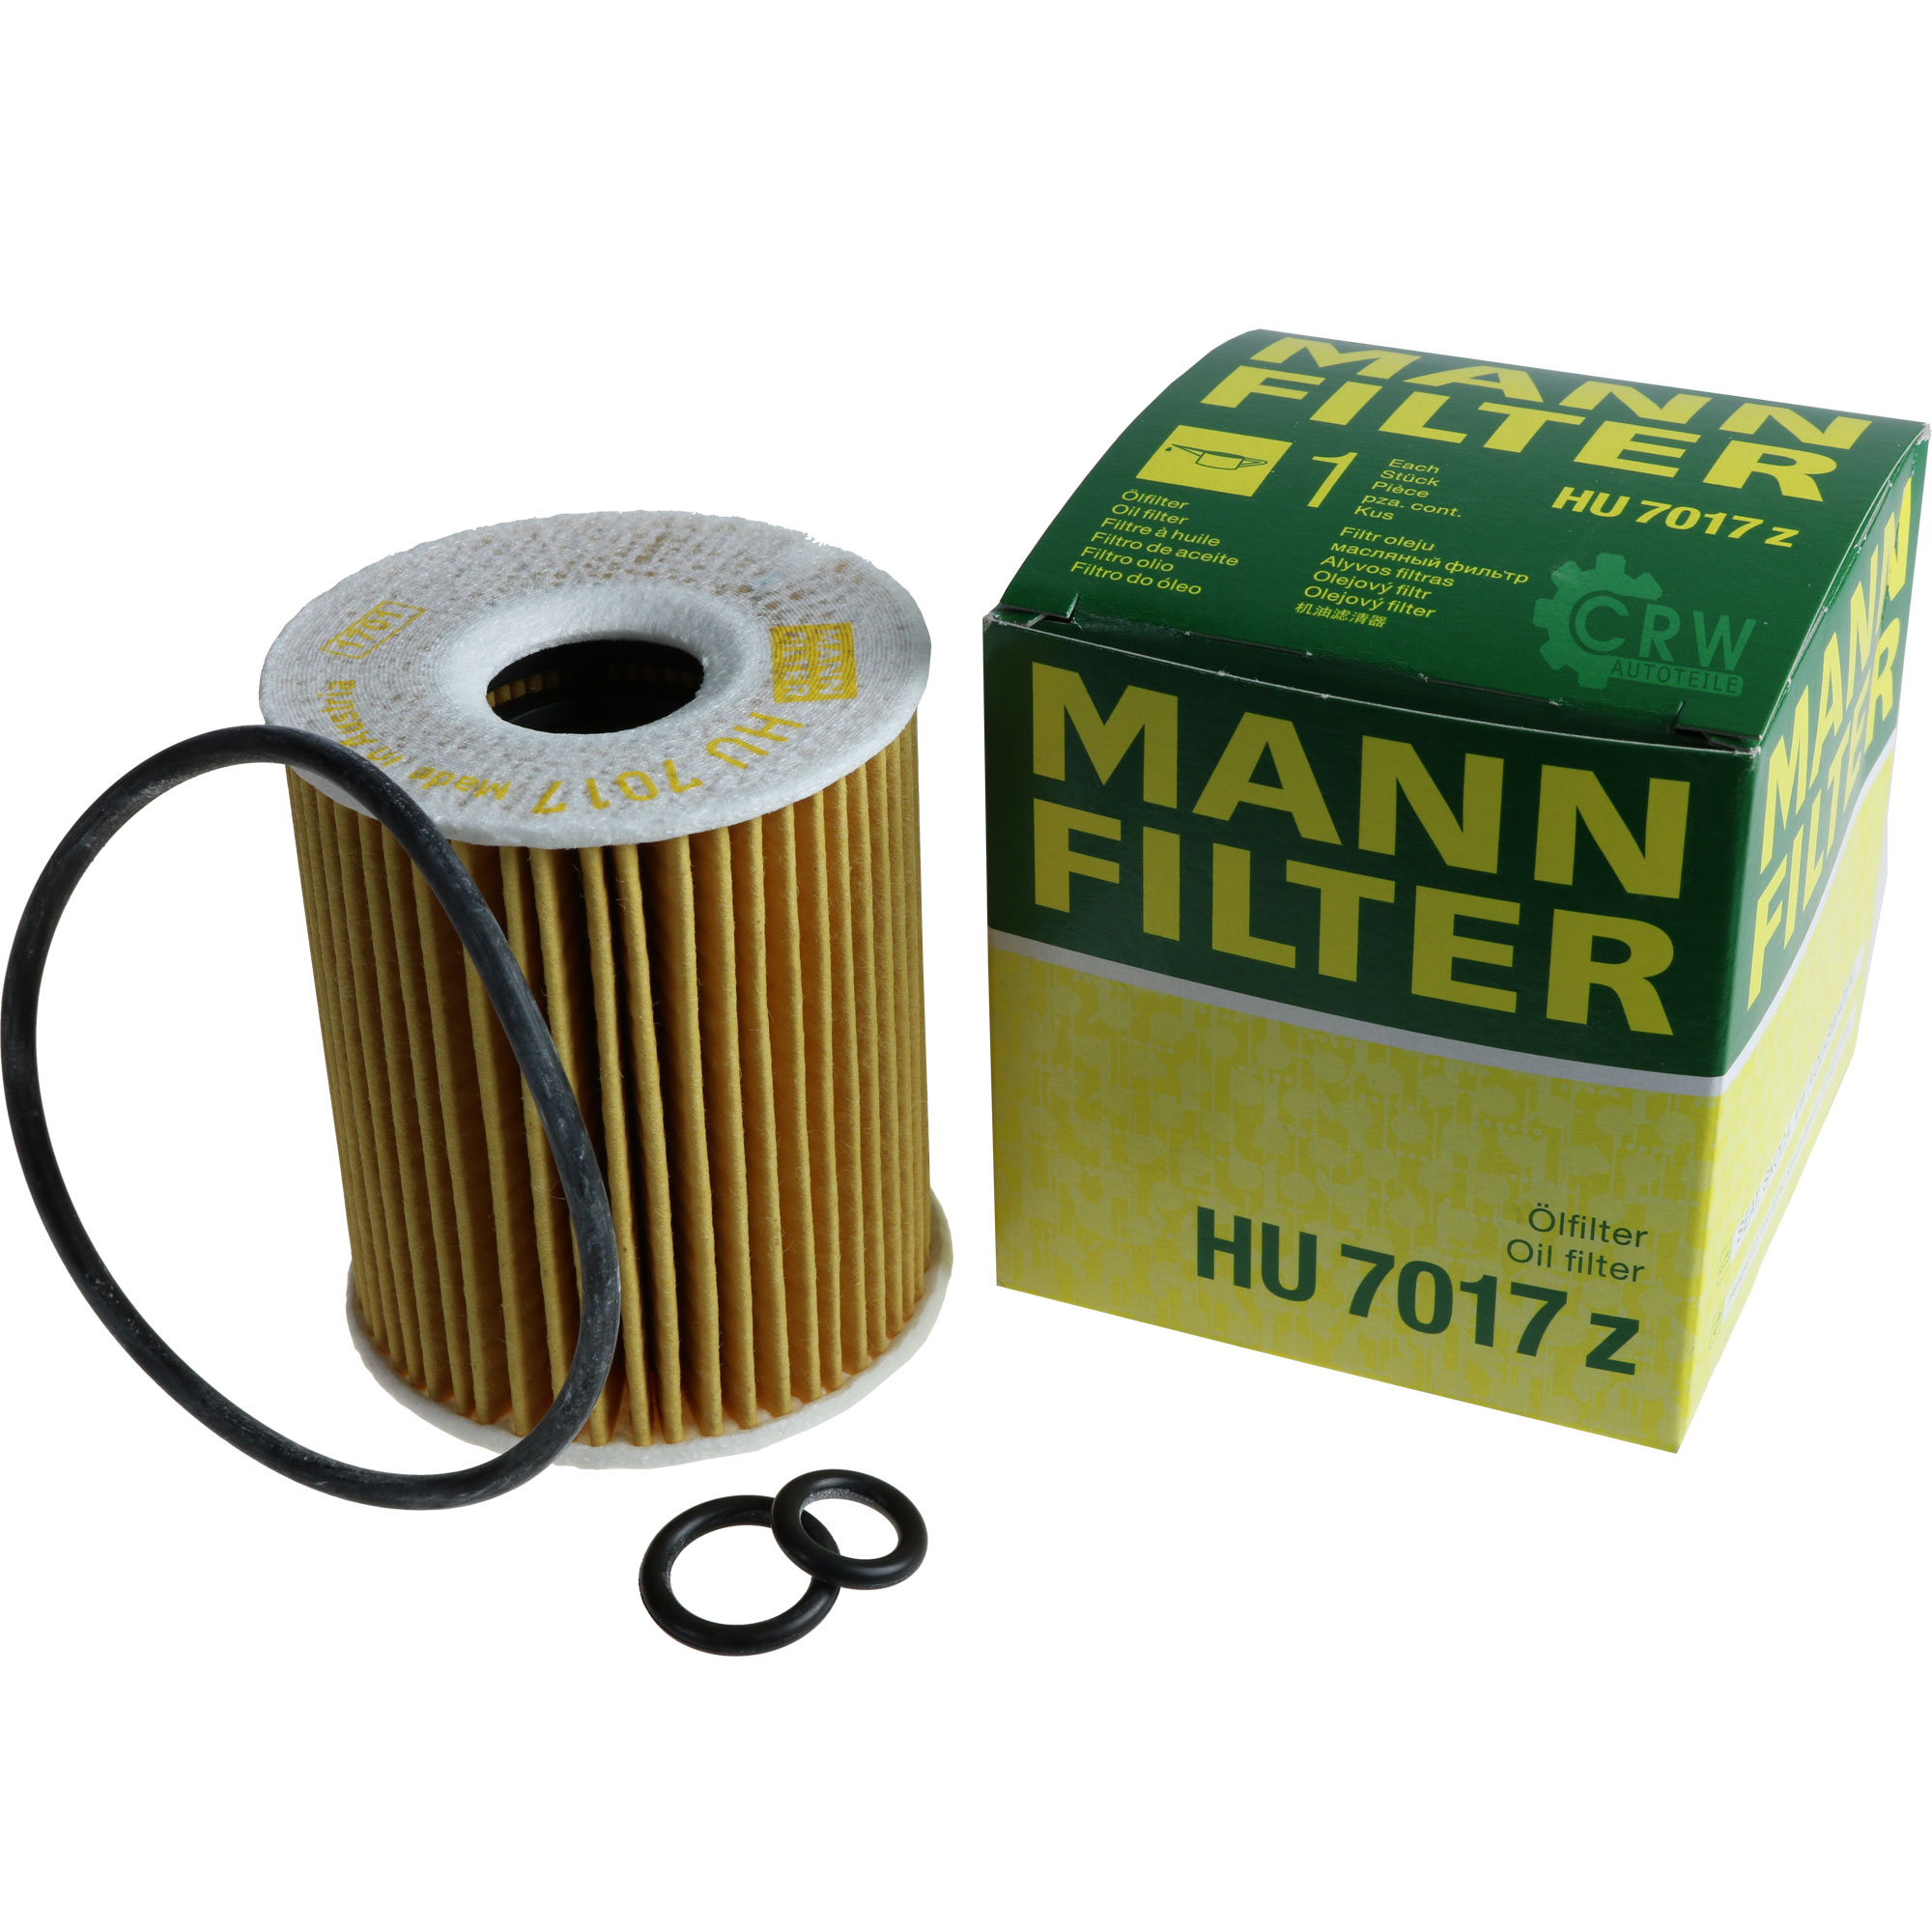 MANN-FILTER Ölfilter HU 7017 z Oil Filter